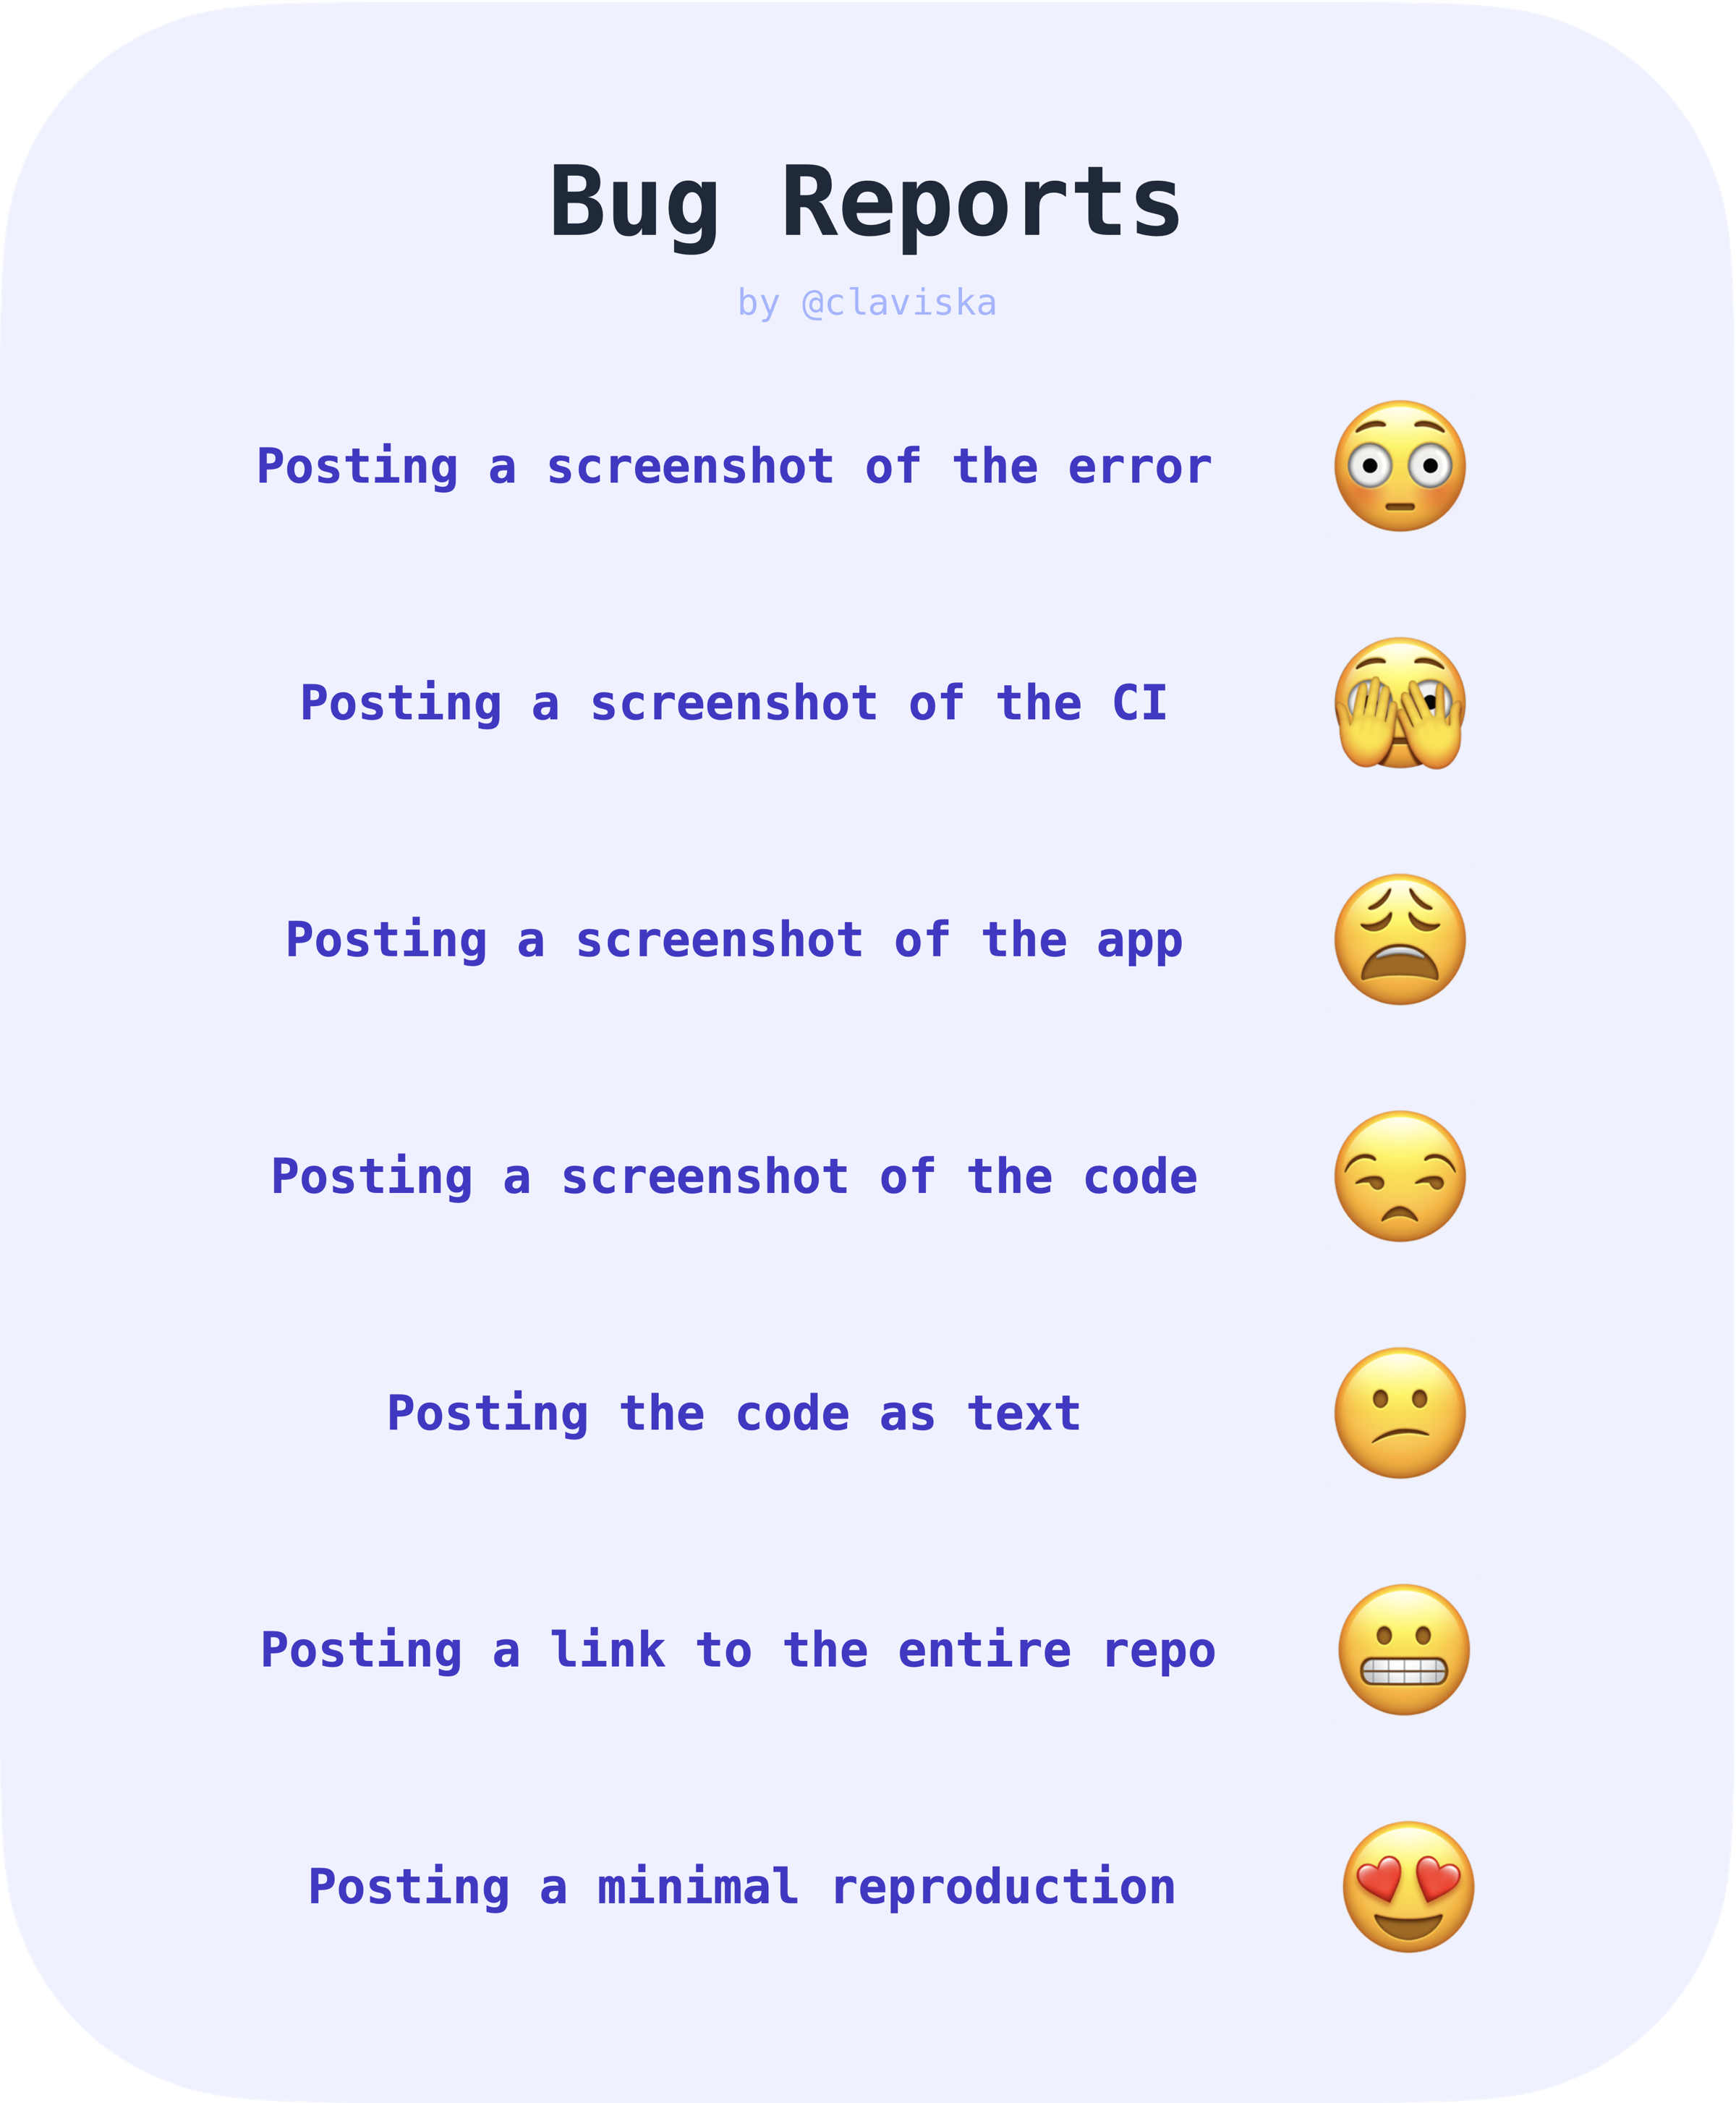 Bug Reports chart